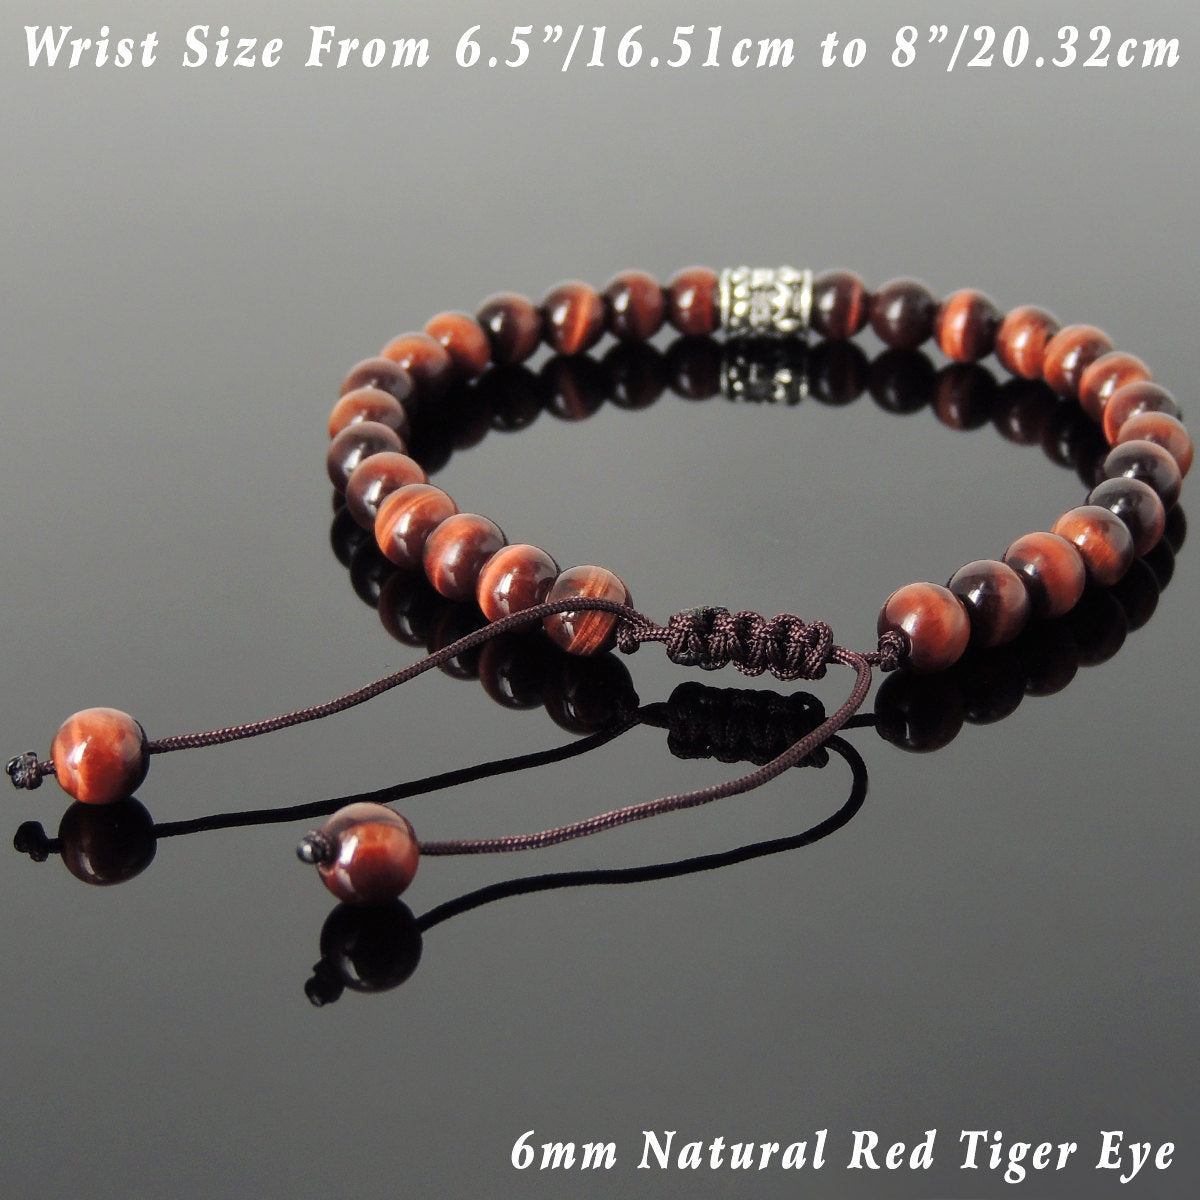 6mm Red Tiger Eye Adjustable Braided Gemstone Bracelet with S925 Sterling Silver Fleur de Lis Barrel Bead - Handmade by Gem & Silver BR770